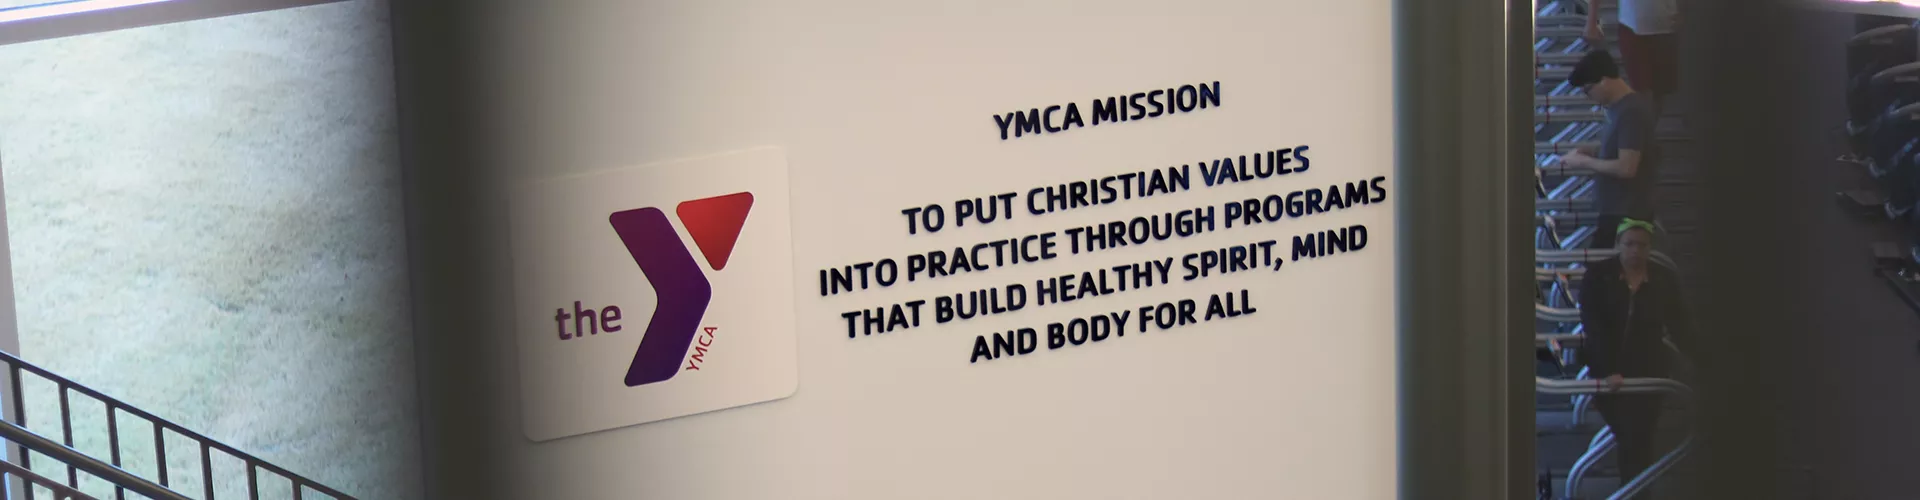 YMCA Mission